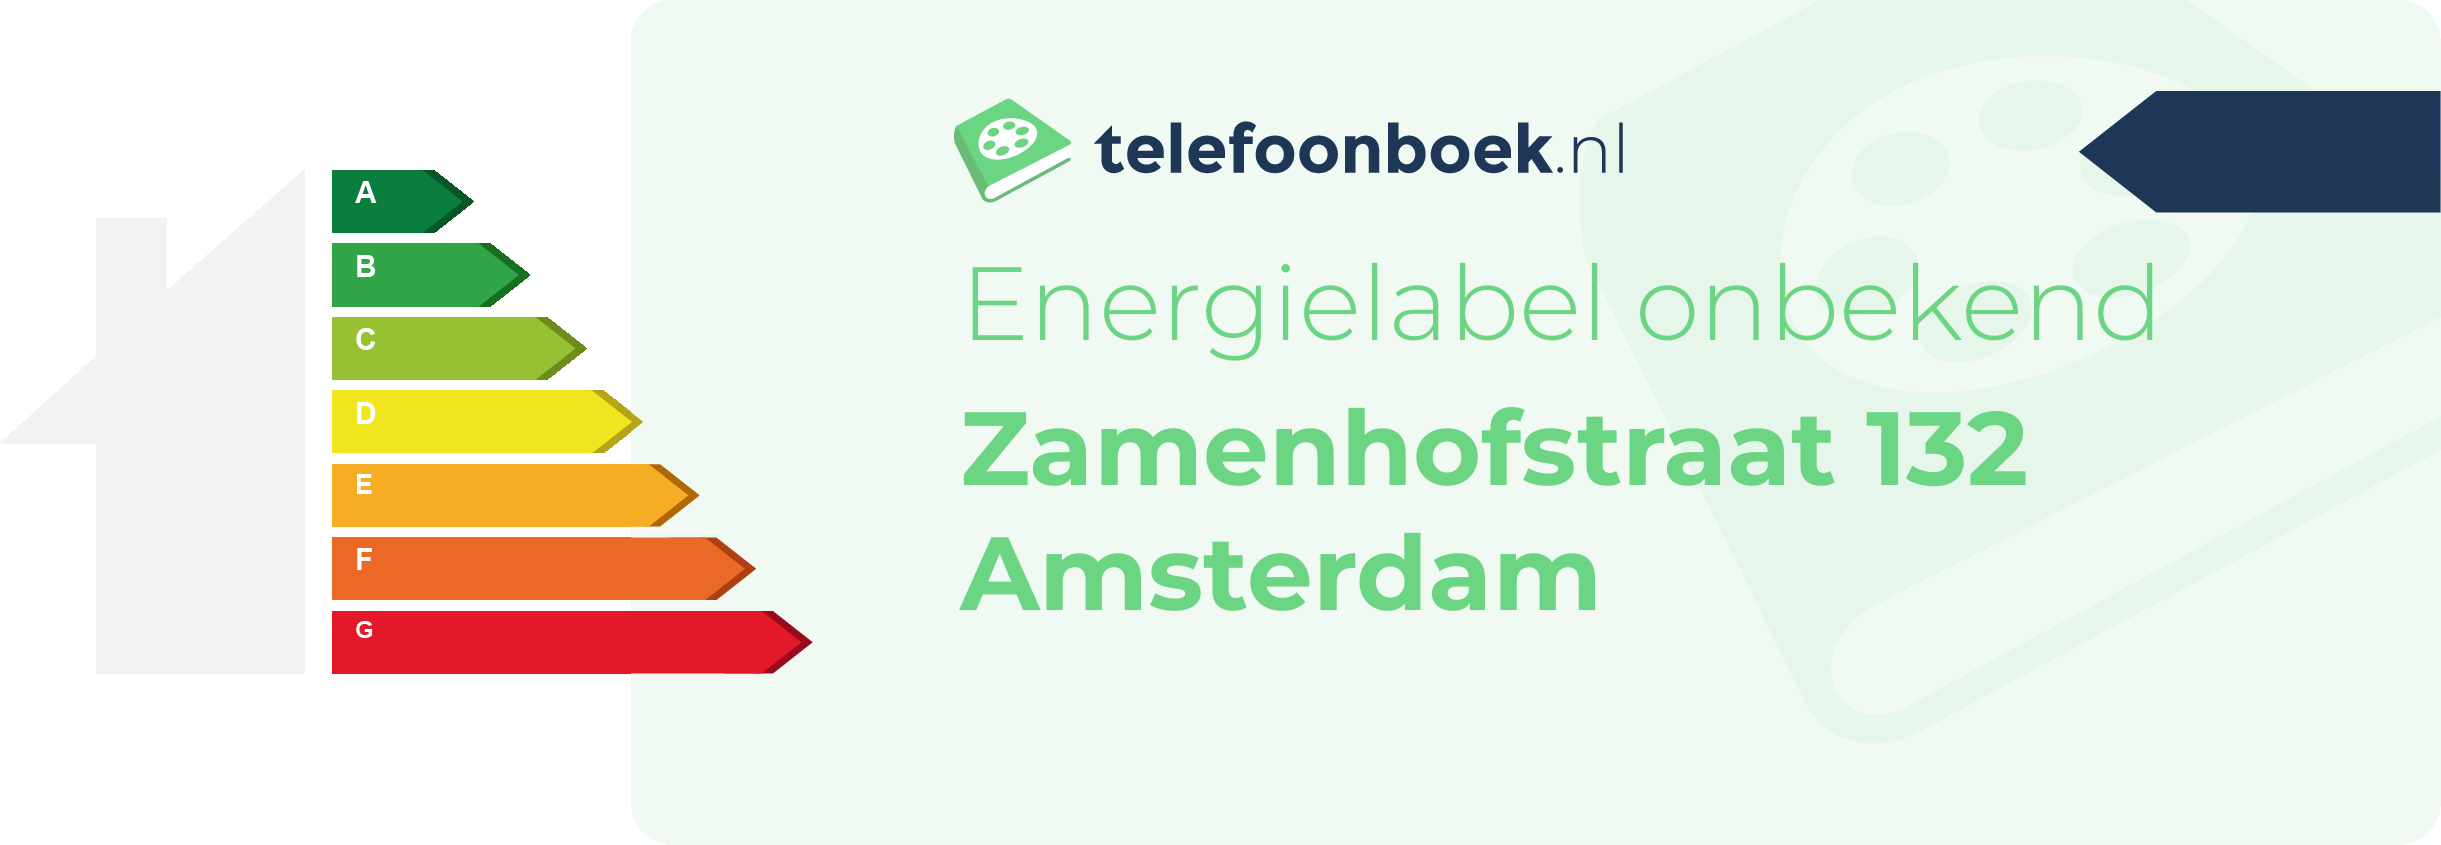 Energielabel Zamenhofstraat 132 Amsterdam